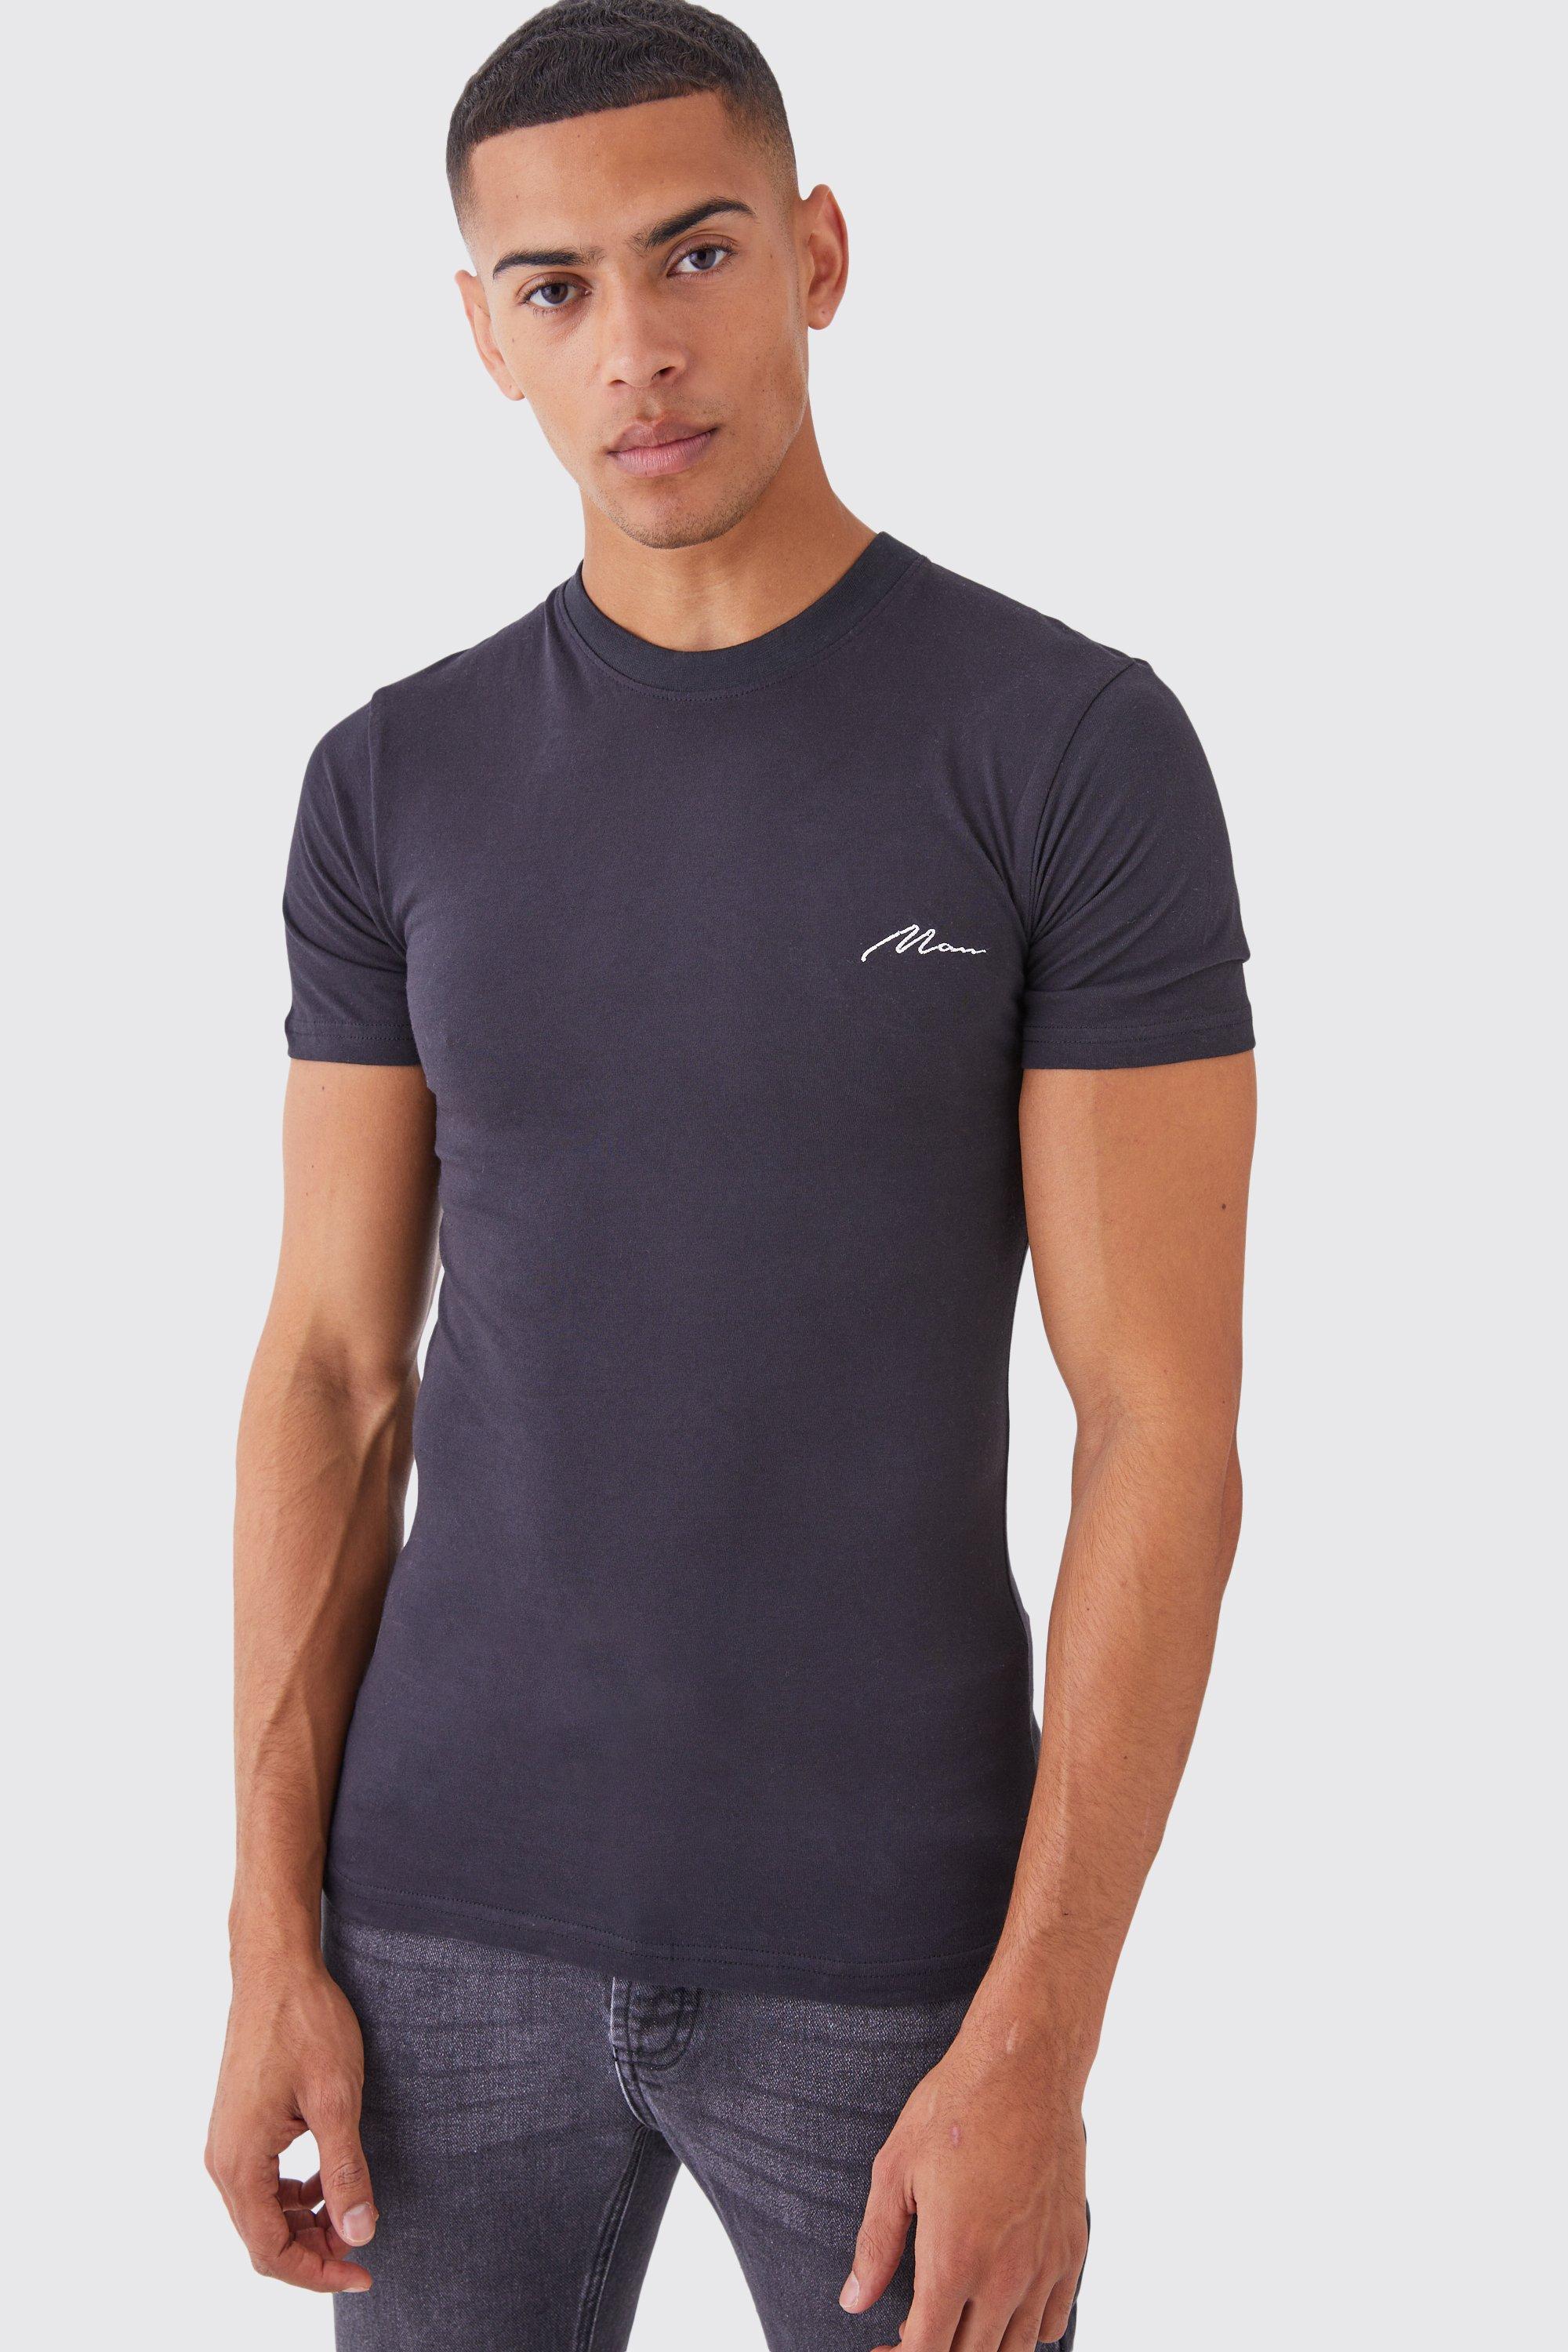 TOPMAN Curved Hem Longline T-shirt in Black for Men